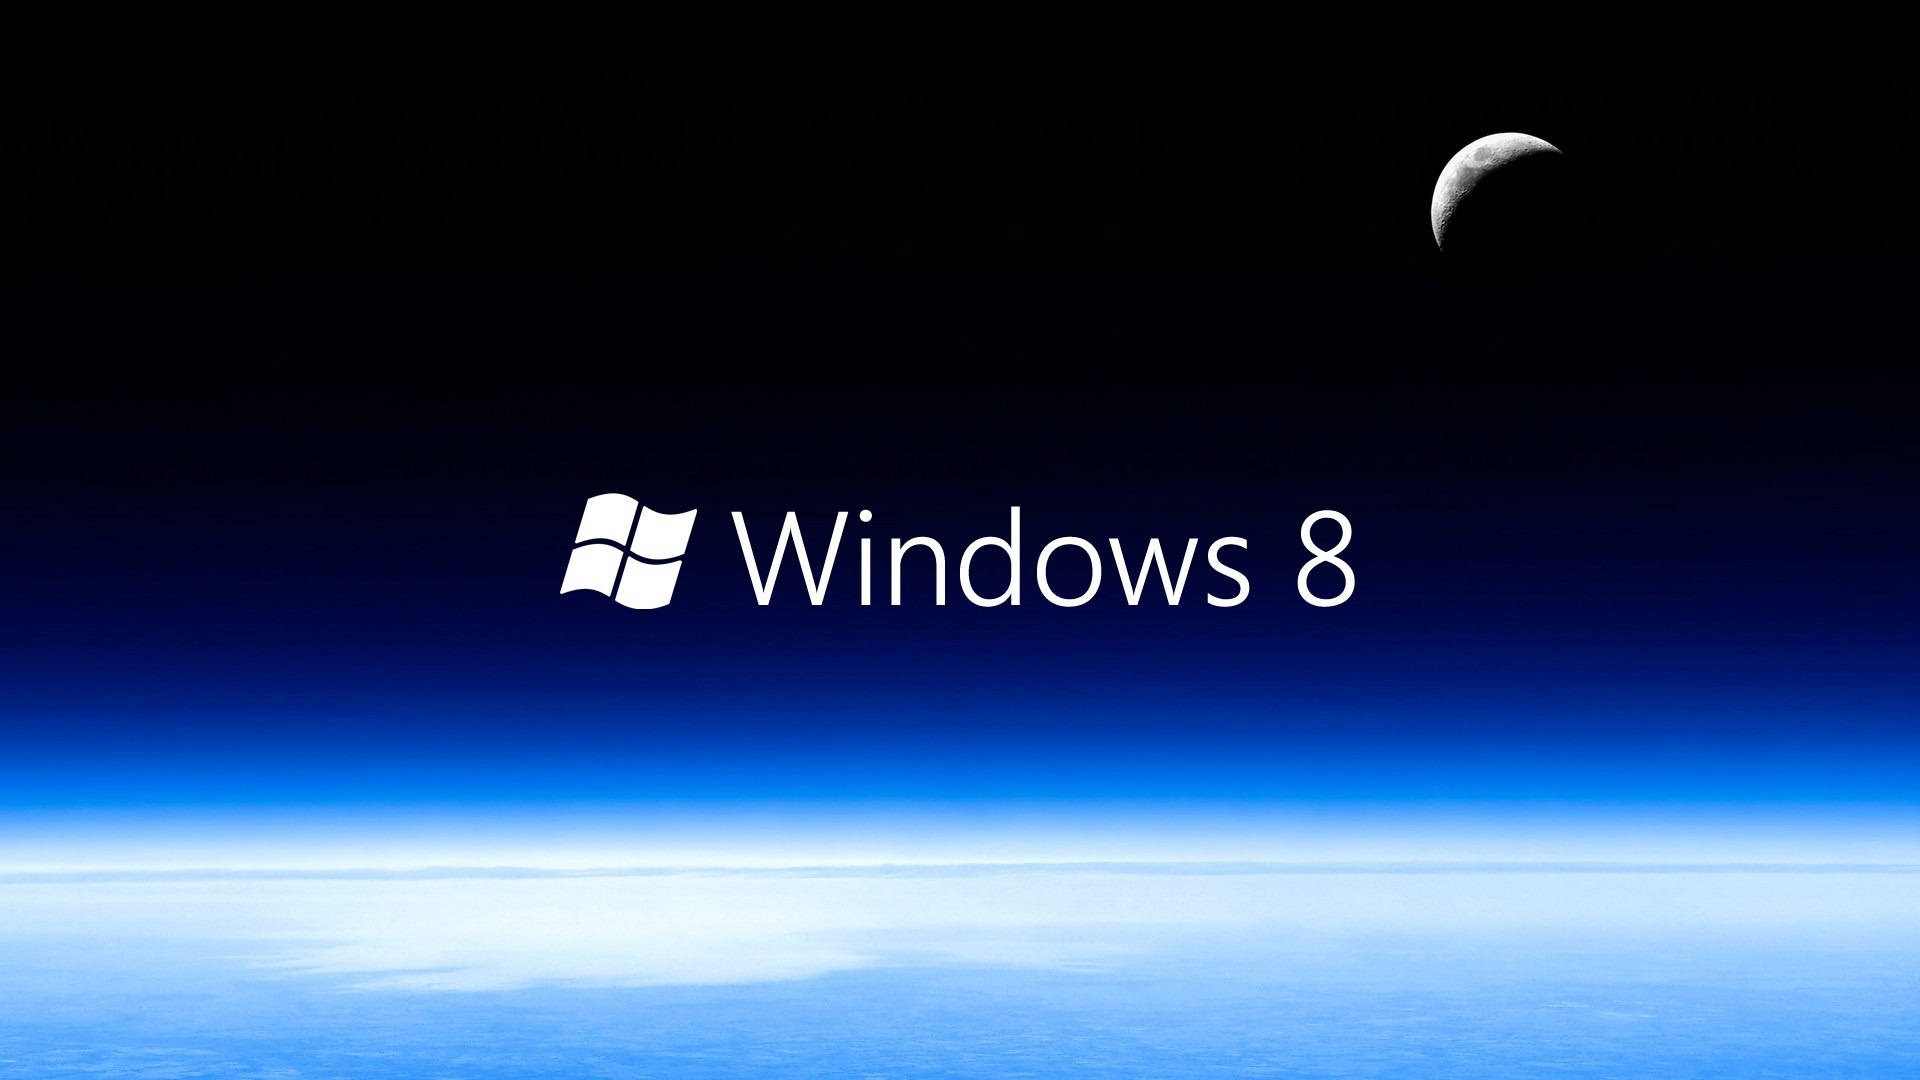 Windows 8 Space Background Background